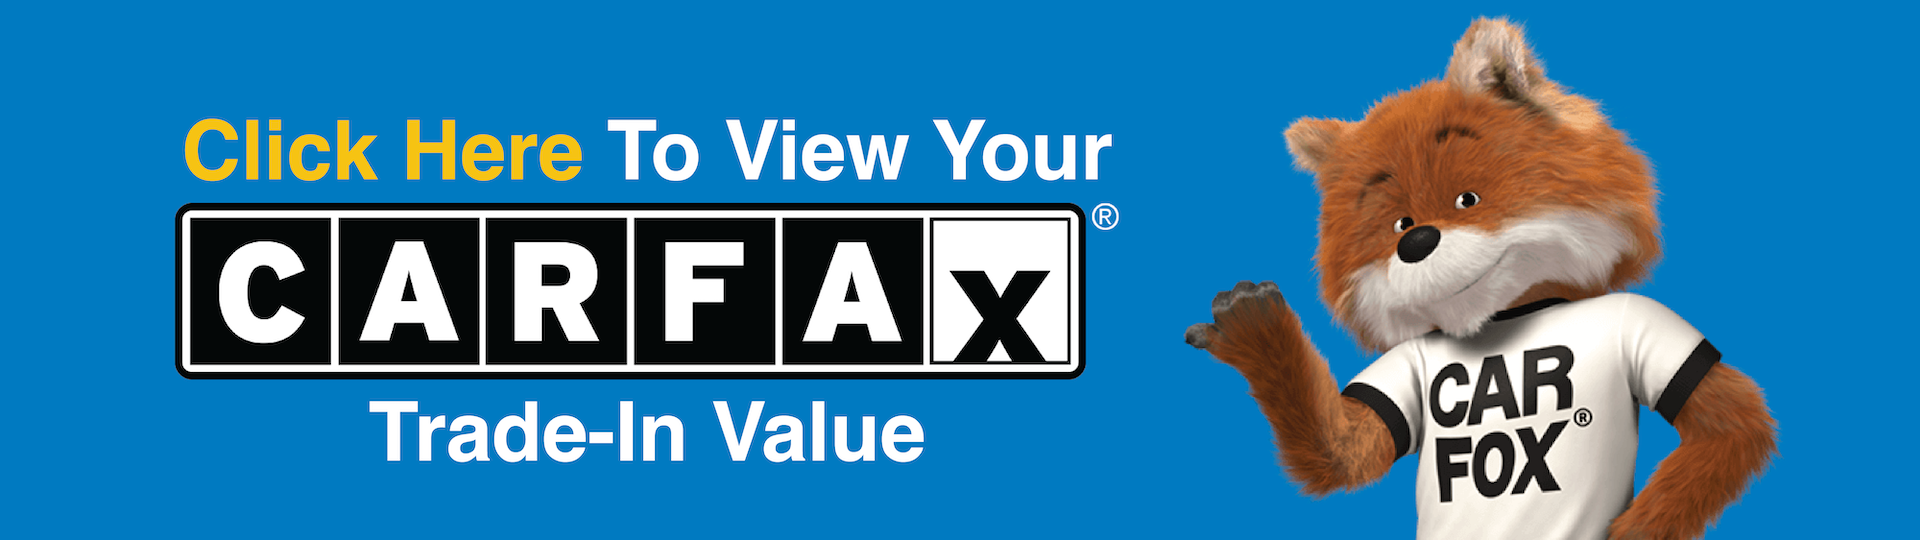 Carfax Trade-in